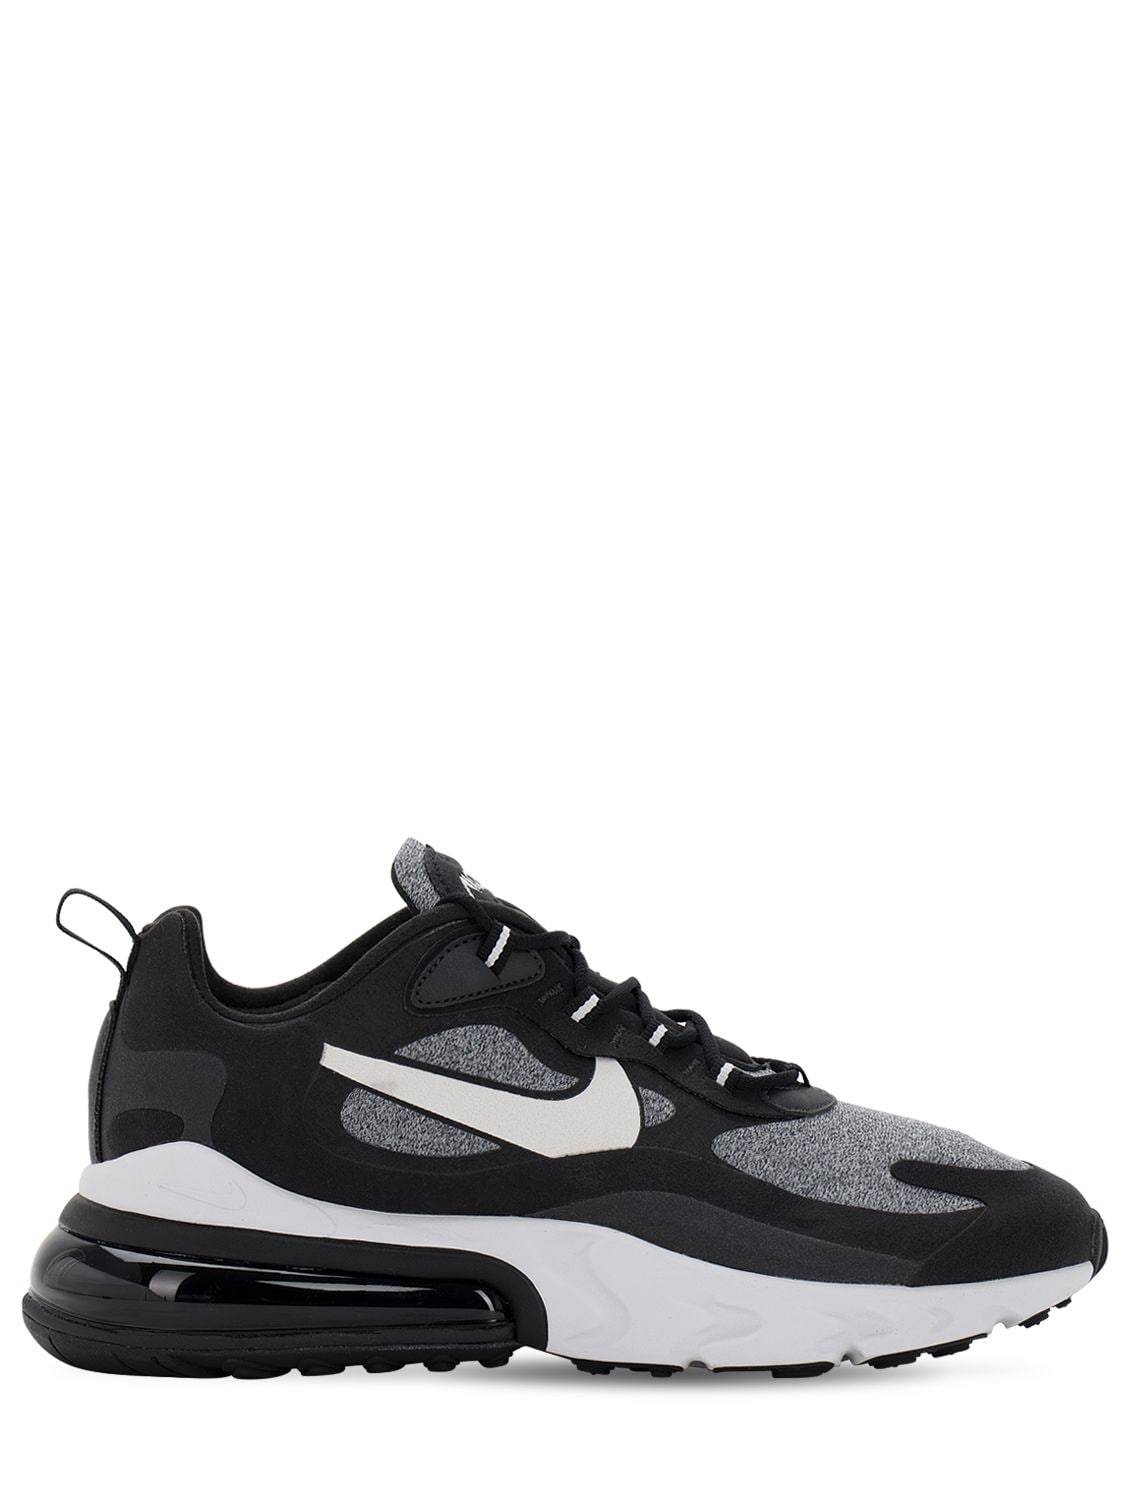 Nike Air Max 270 React Sneakers In Black,grey